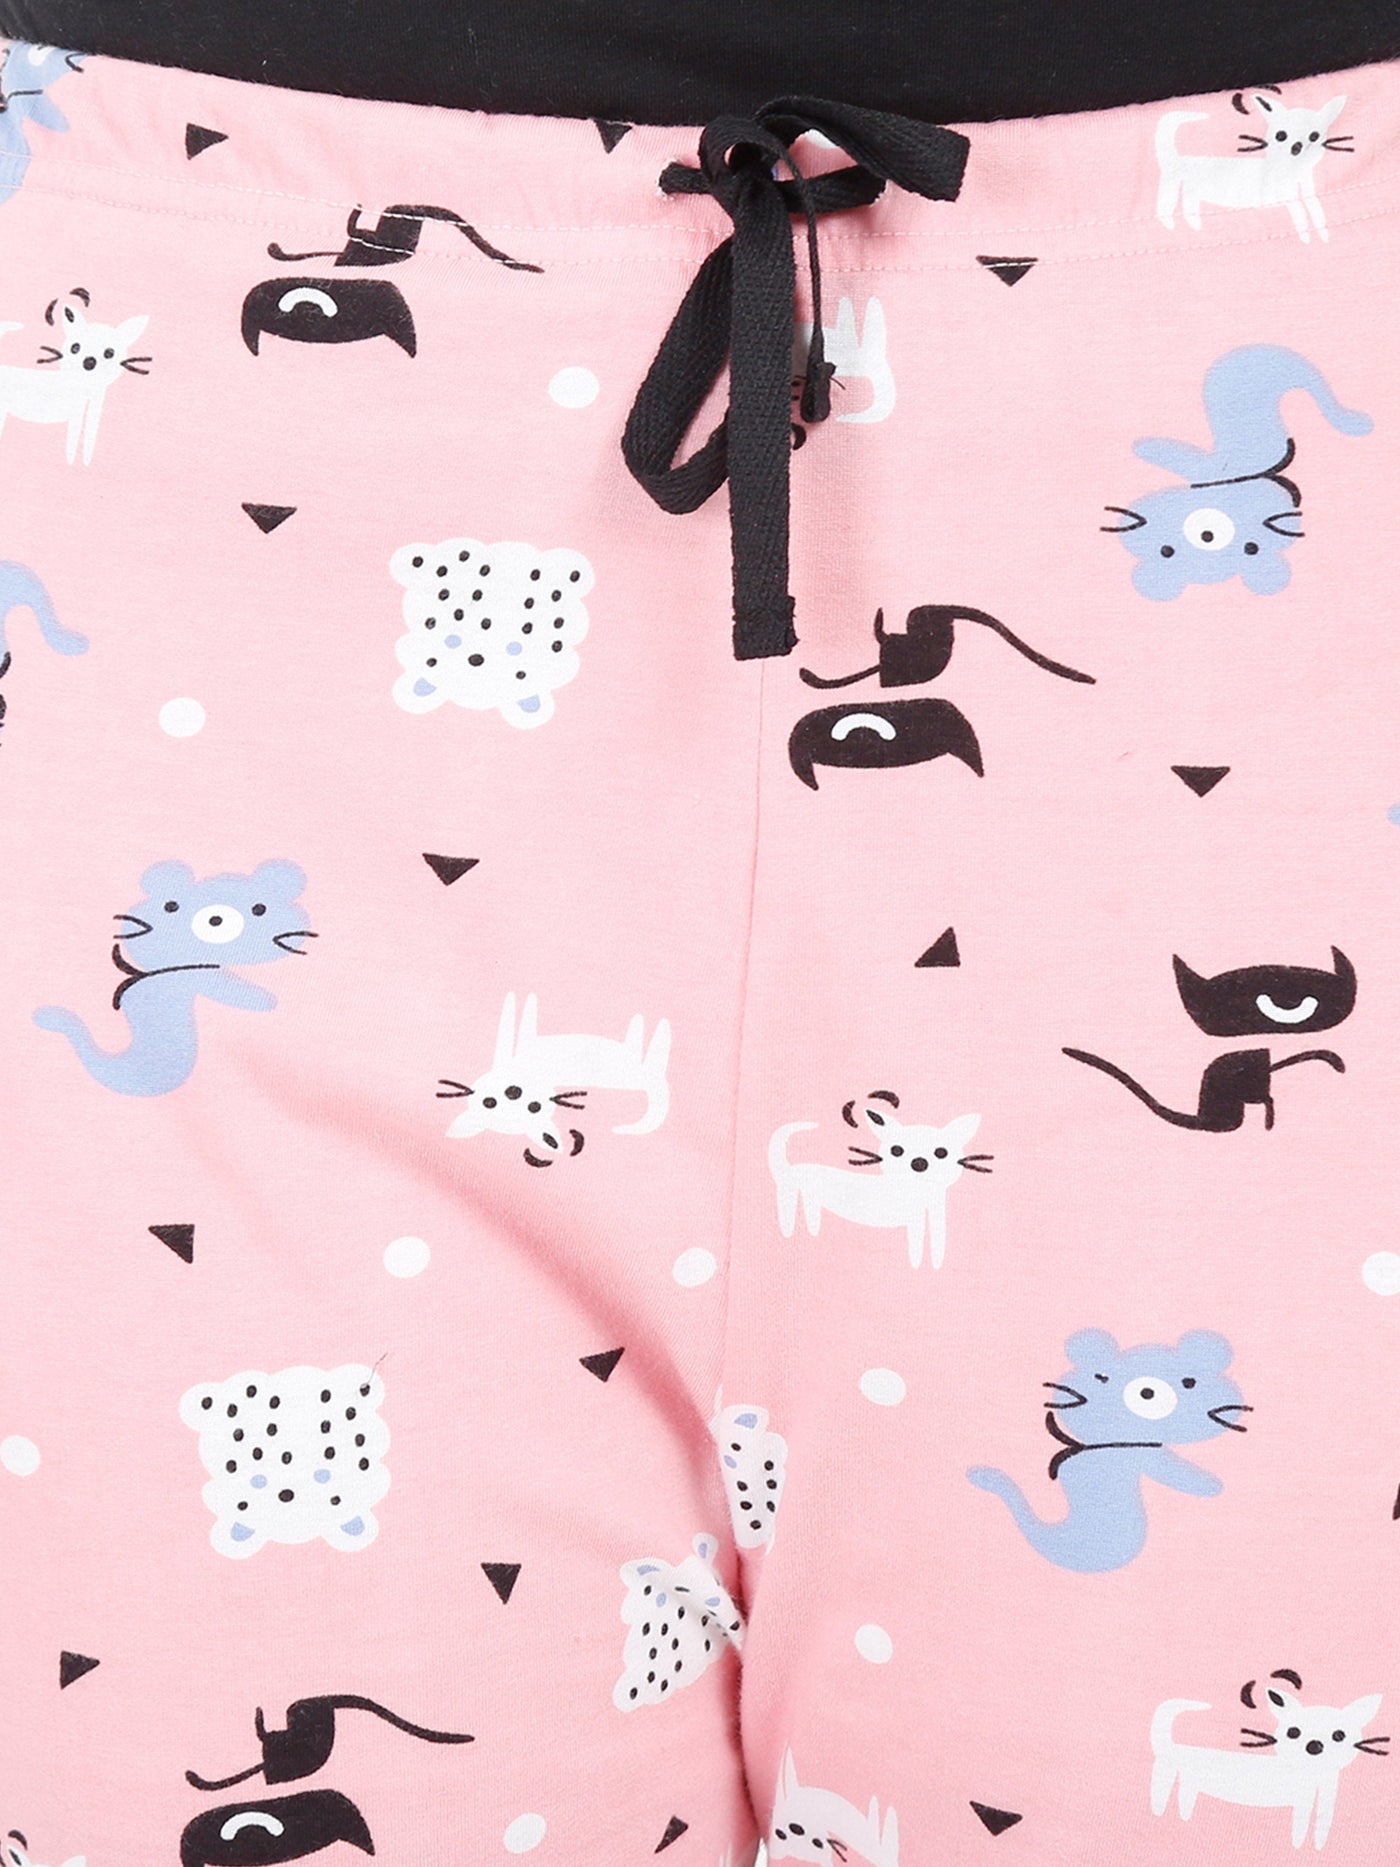 Hosiery Cotton Pyjama Pink Cat